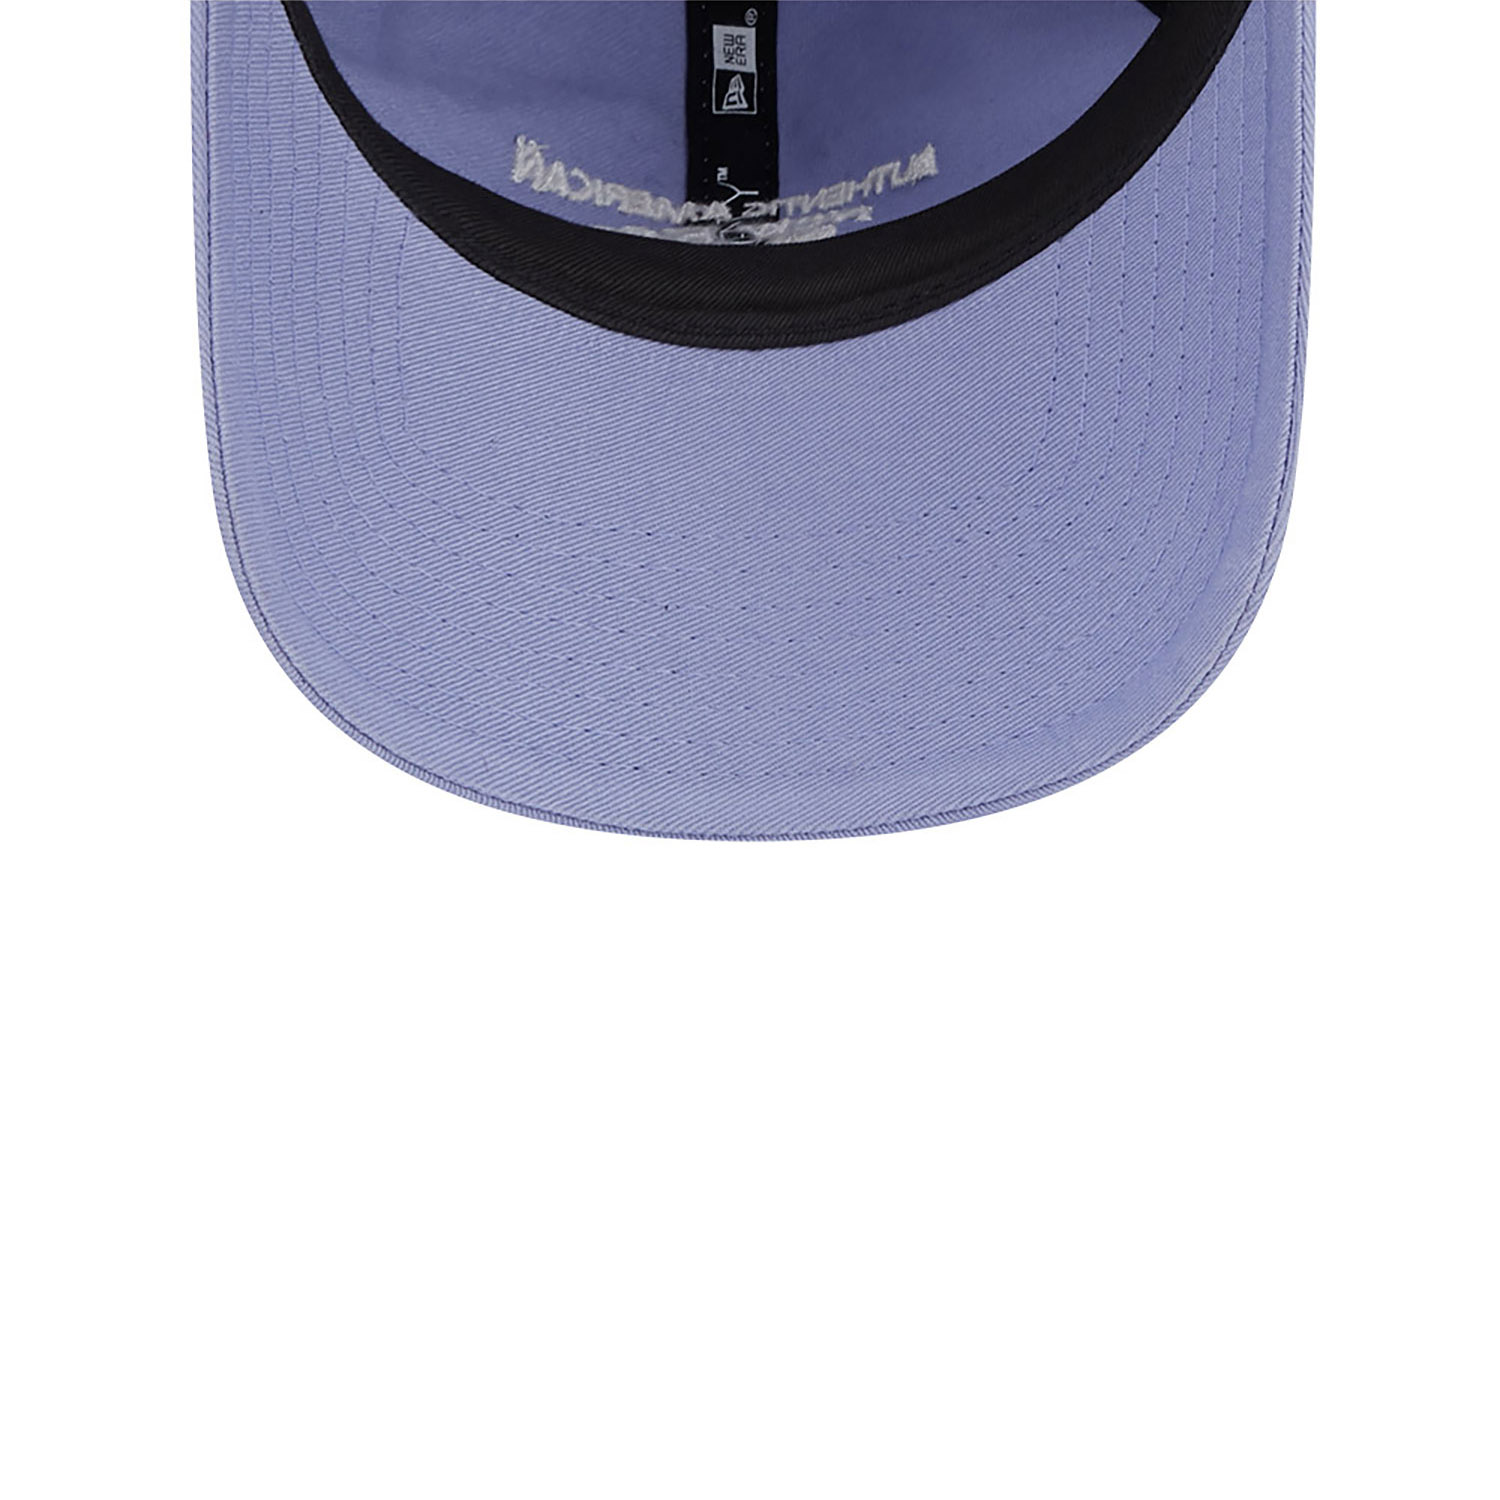 New Era Women's New York Yankees Light Purple 9Twenty Adjustable Hat